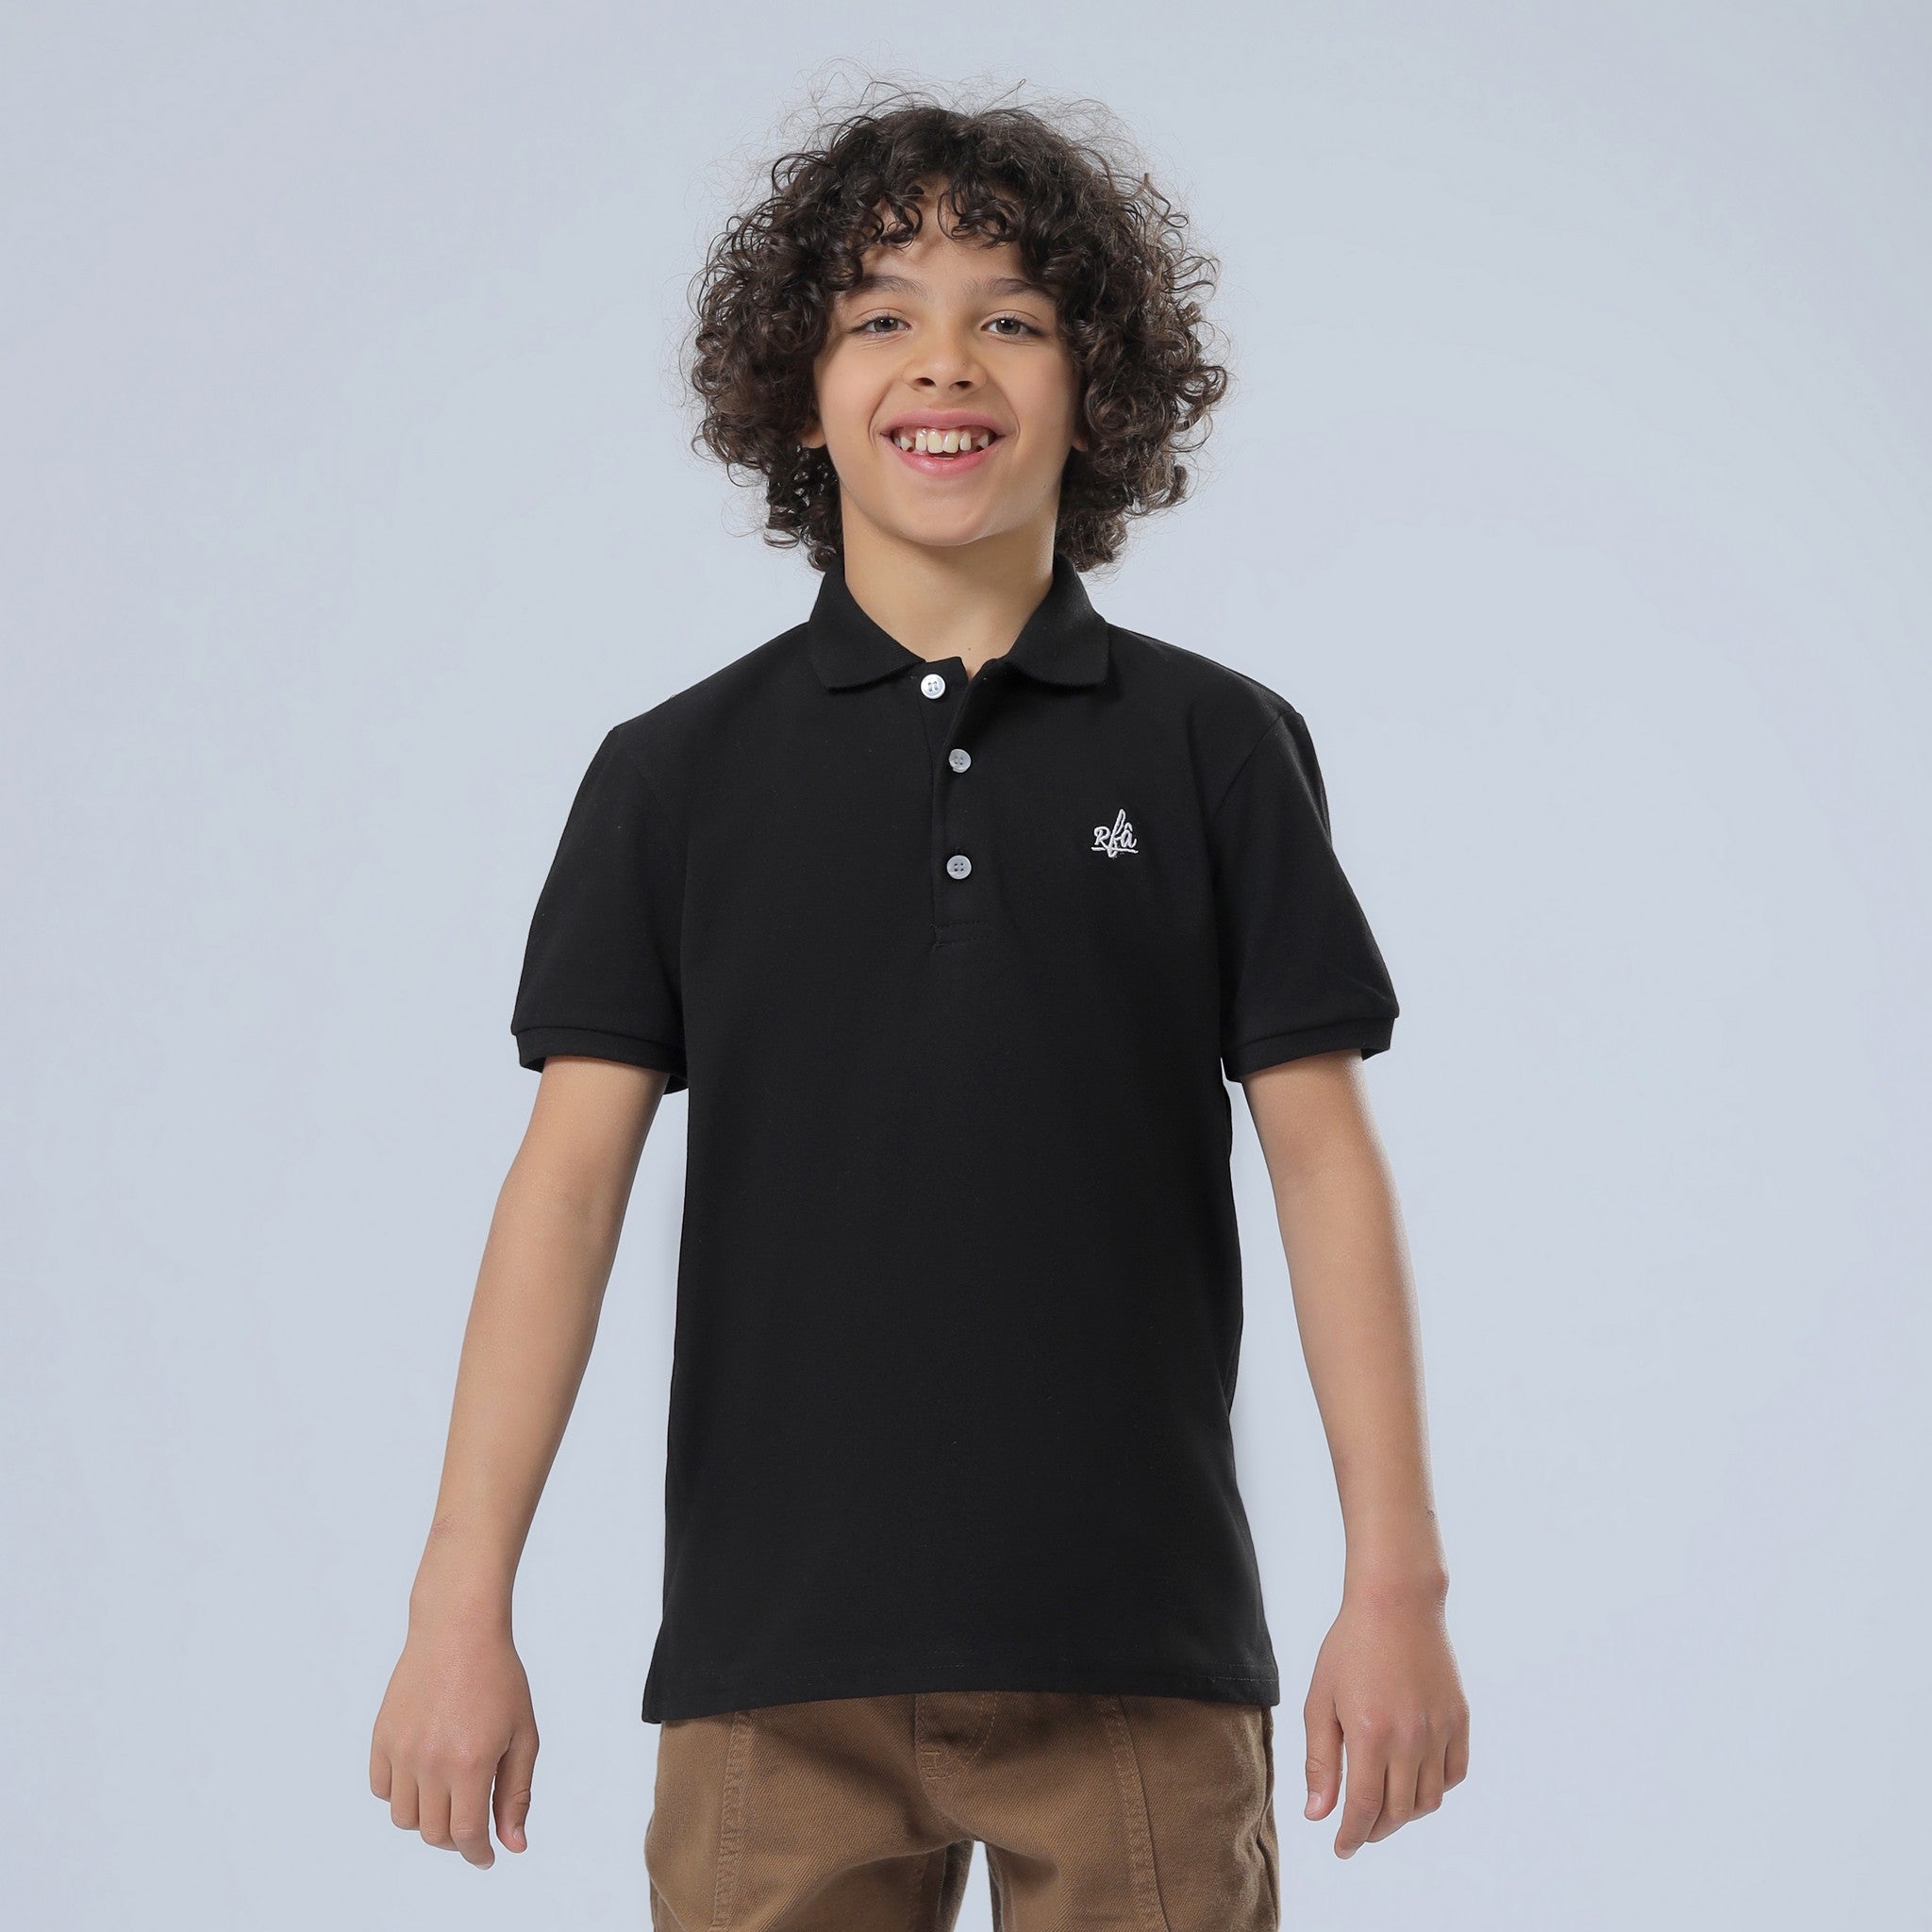 Rfa Black Polo Shirt